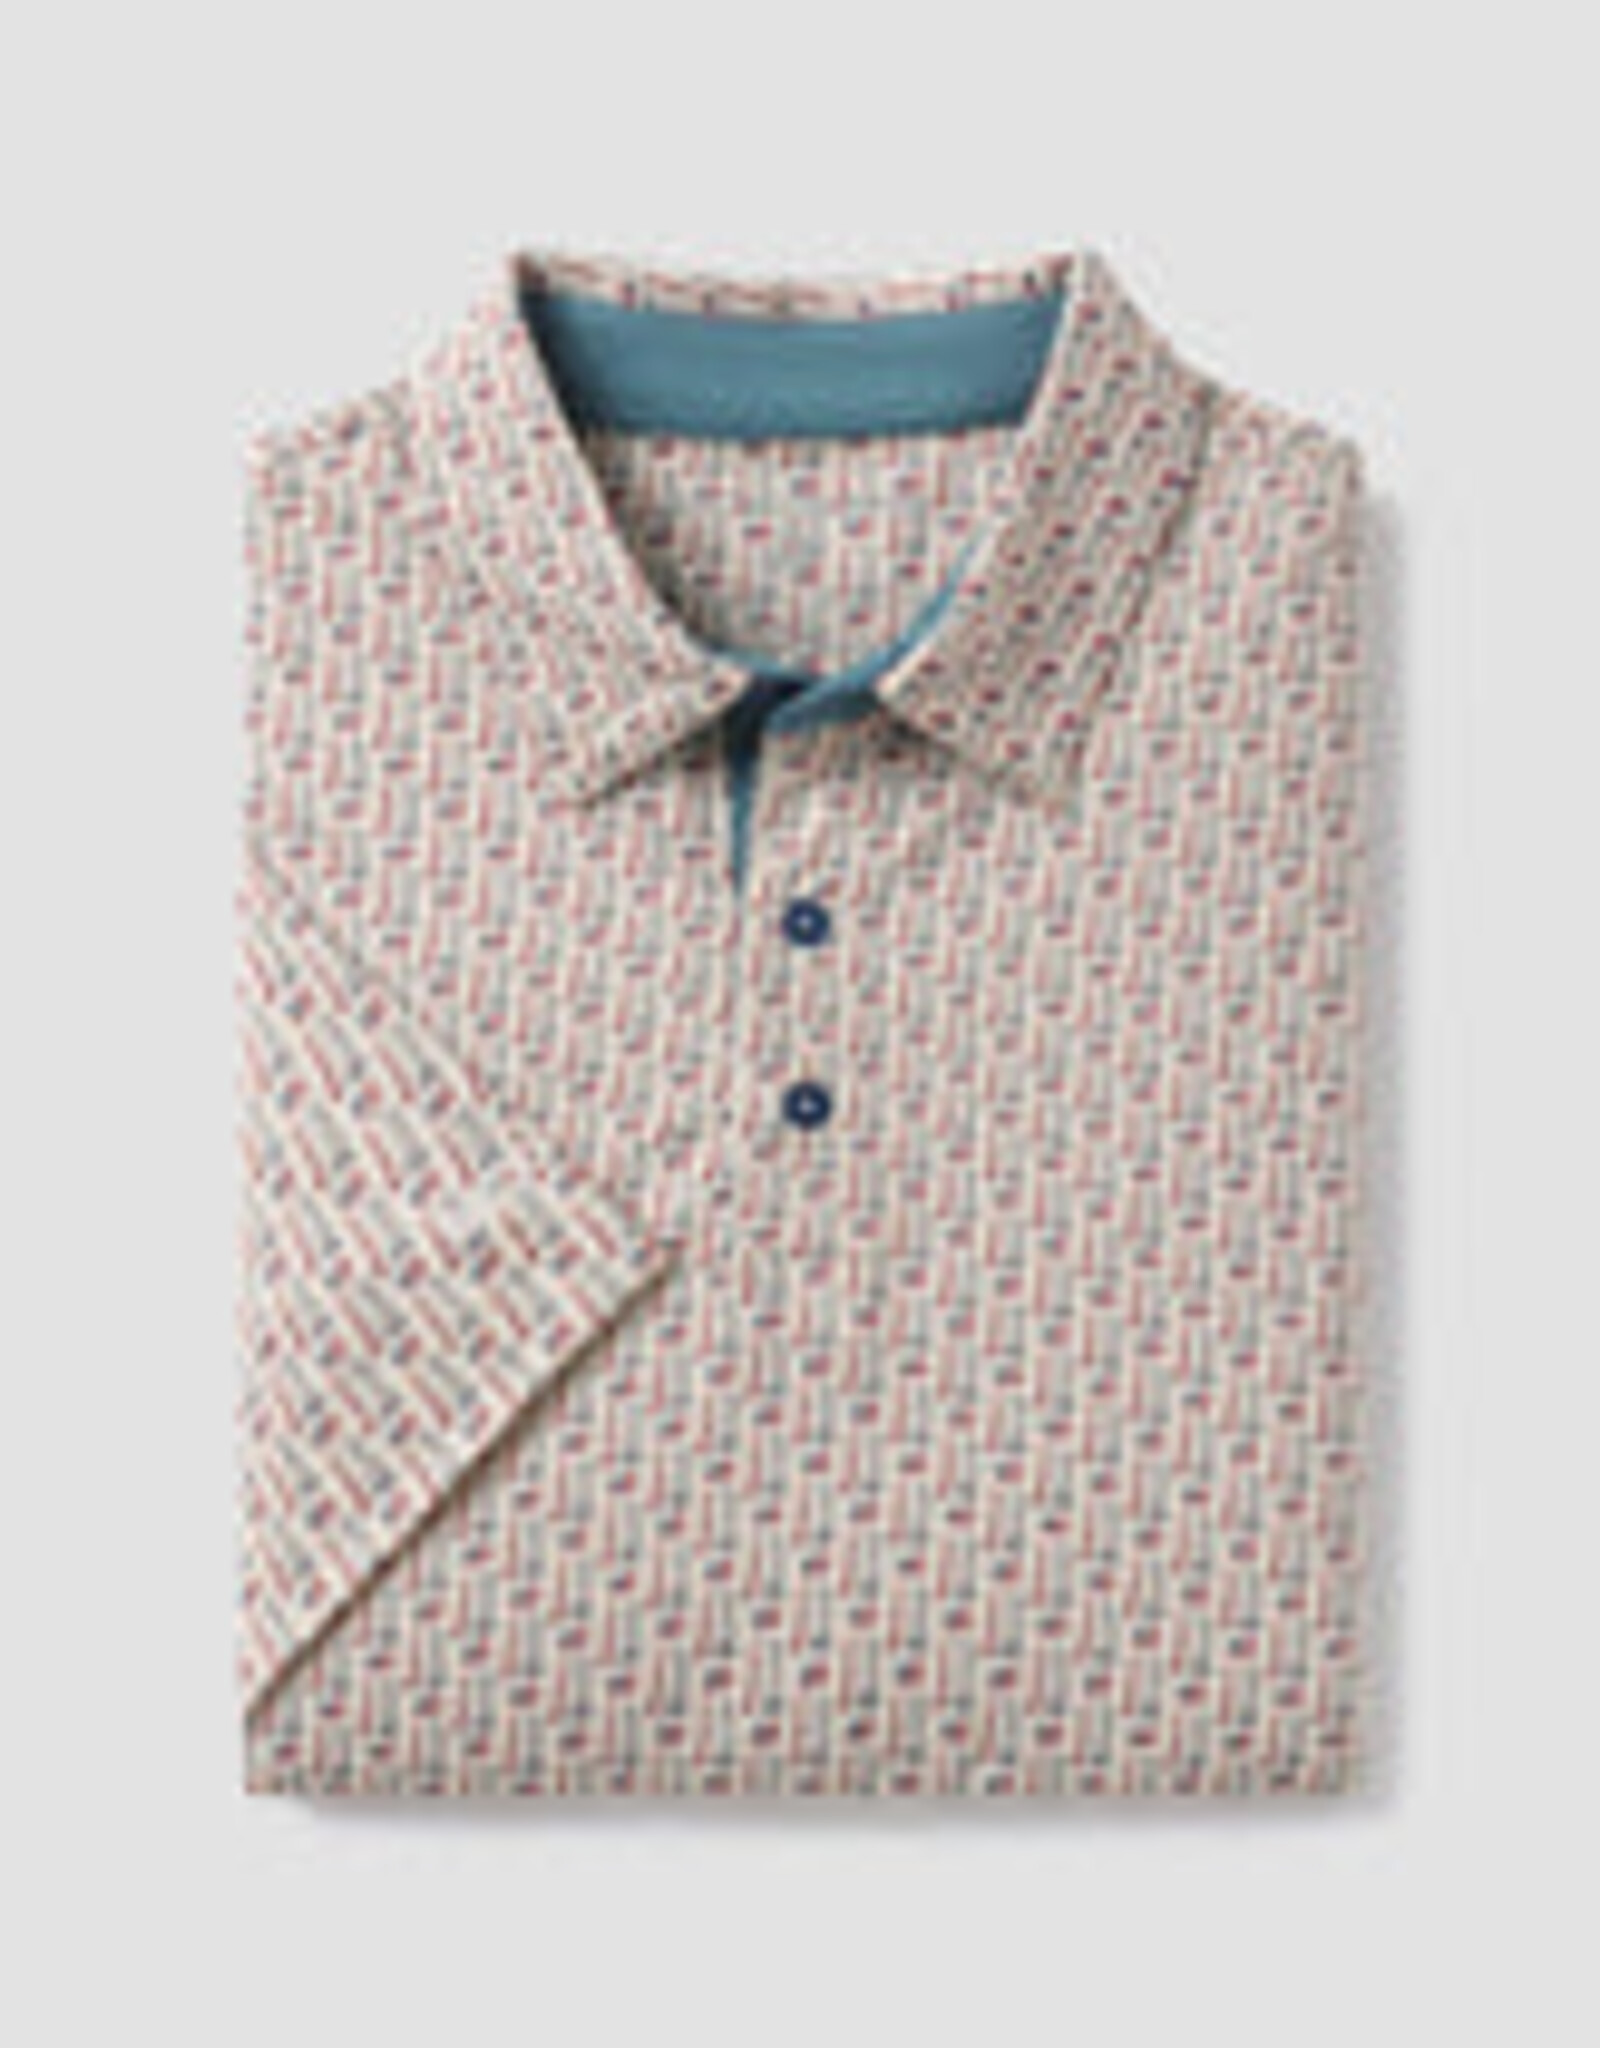 Southern Shirt Company Southern Shirt Co. Pass the Buckshot Printed Polo